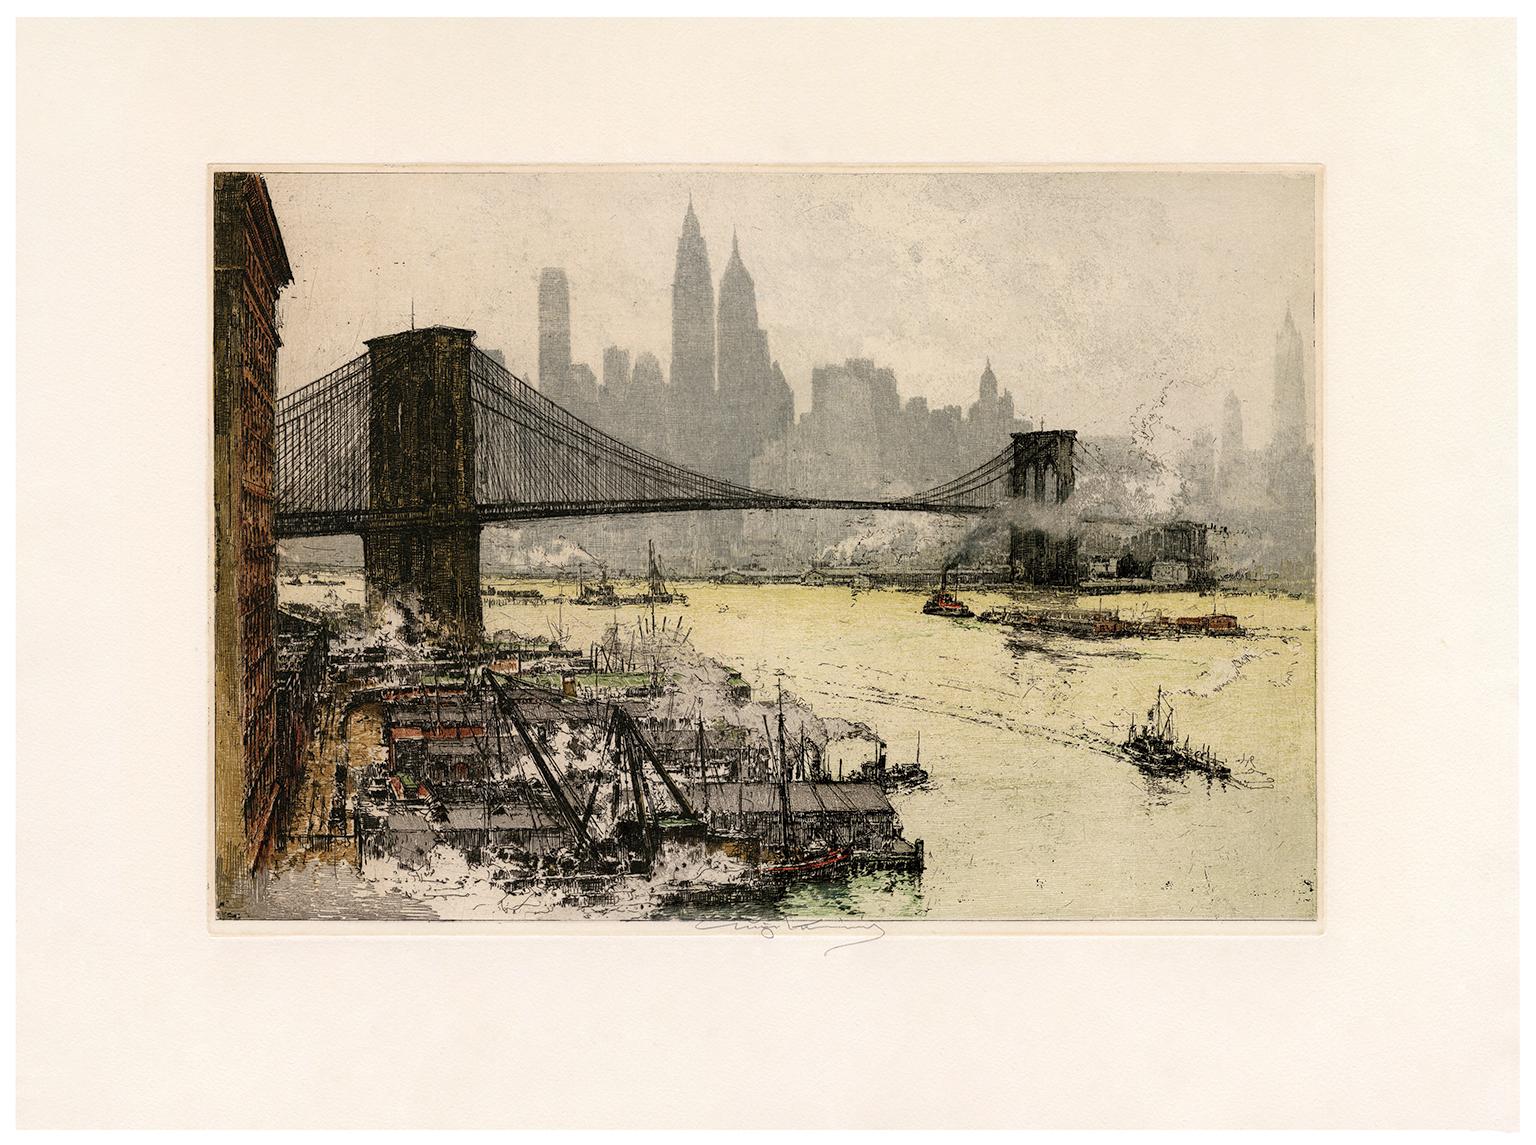 'Brooklyn Bridge' — 1920s view of an iconic New York City landmark - Print by Luigi Kasimir